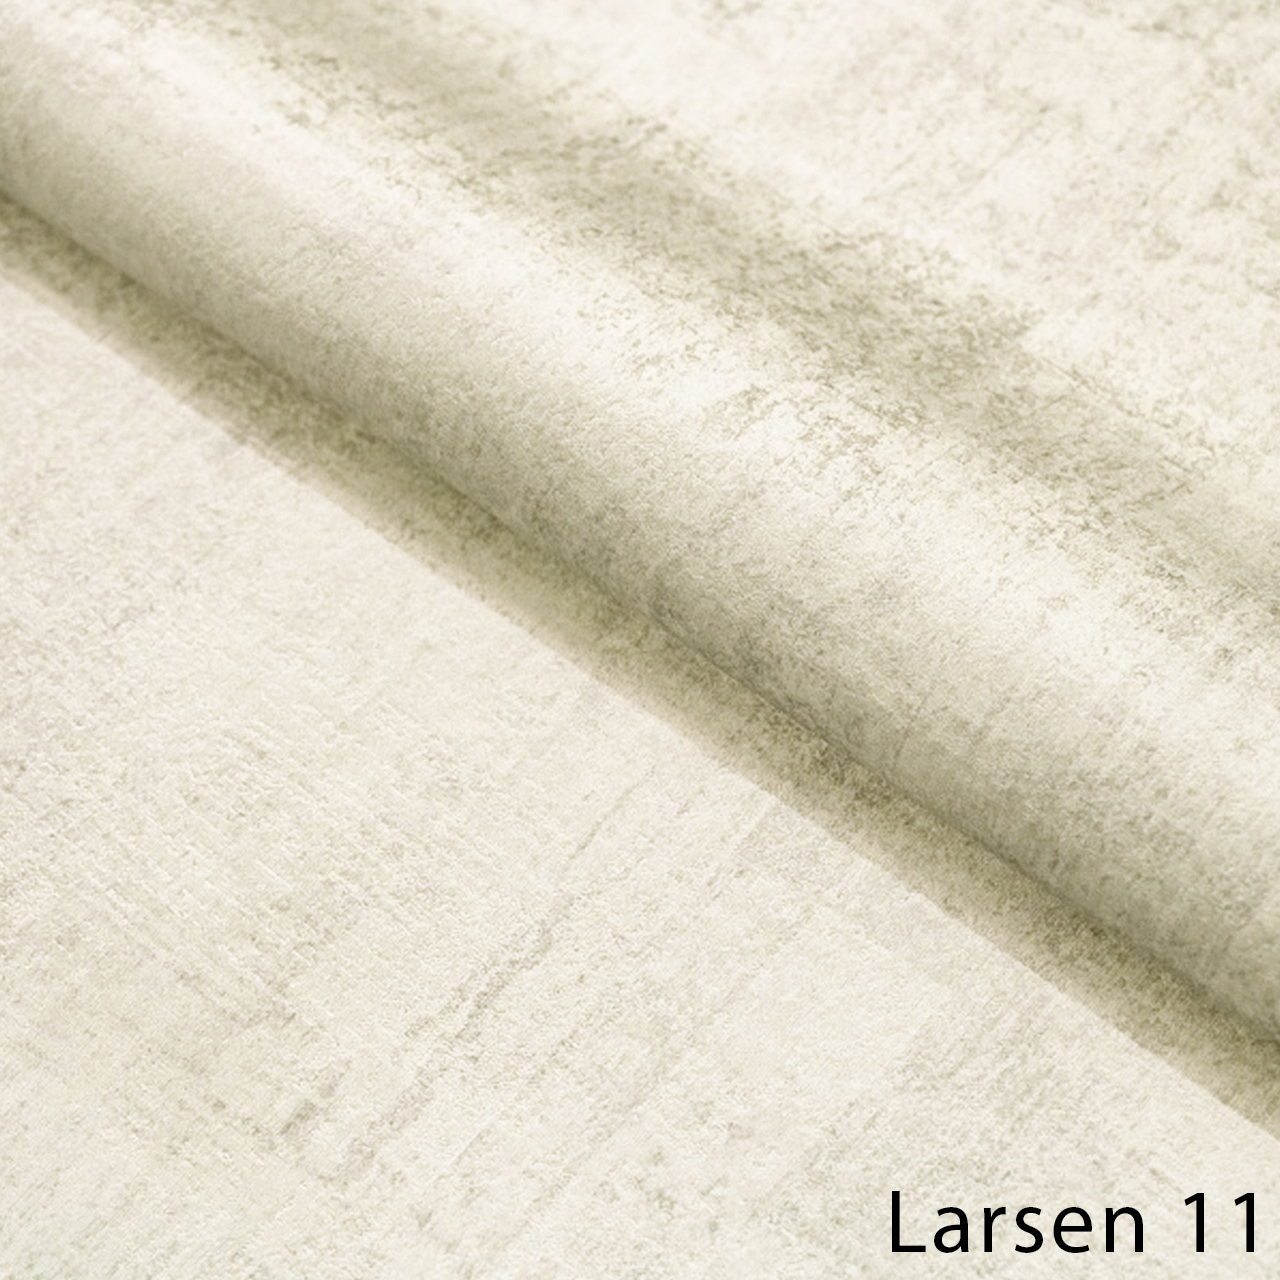 Larsen 11